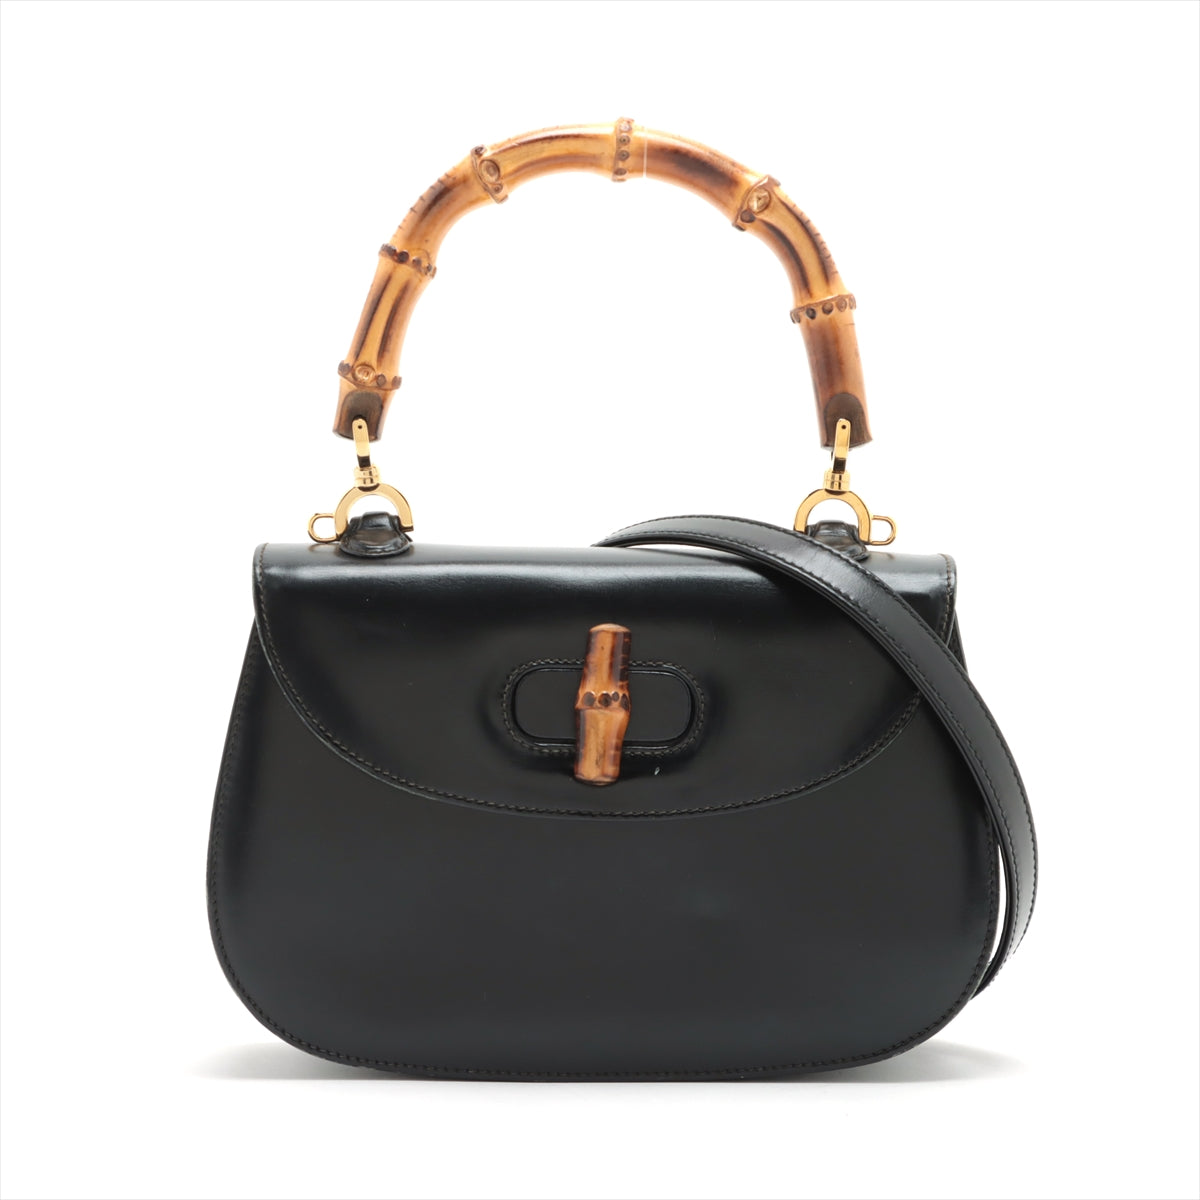 Gucci Bamboo Leather 2way handbag Black With mirror